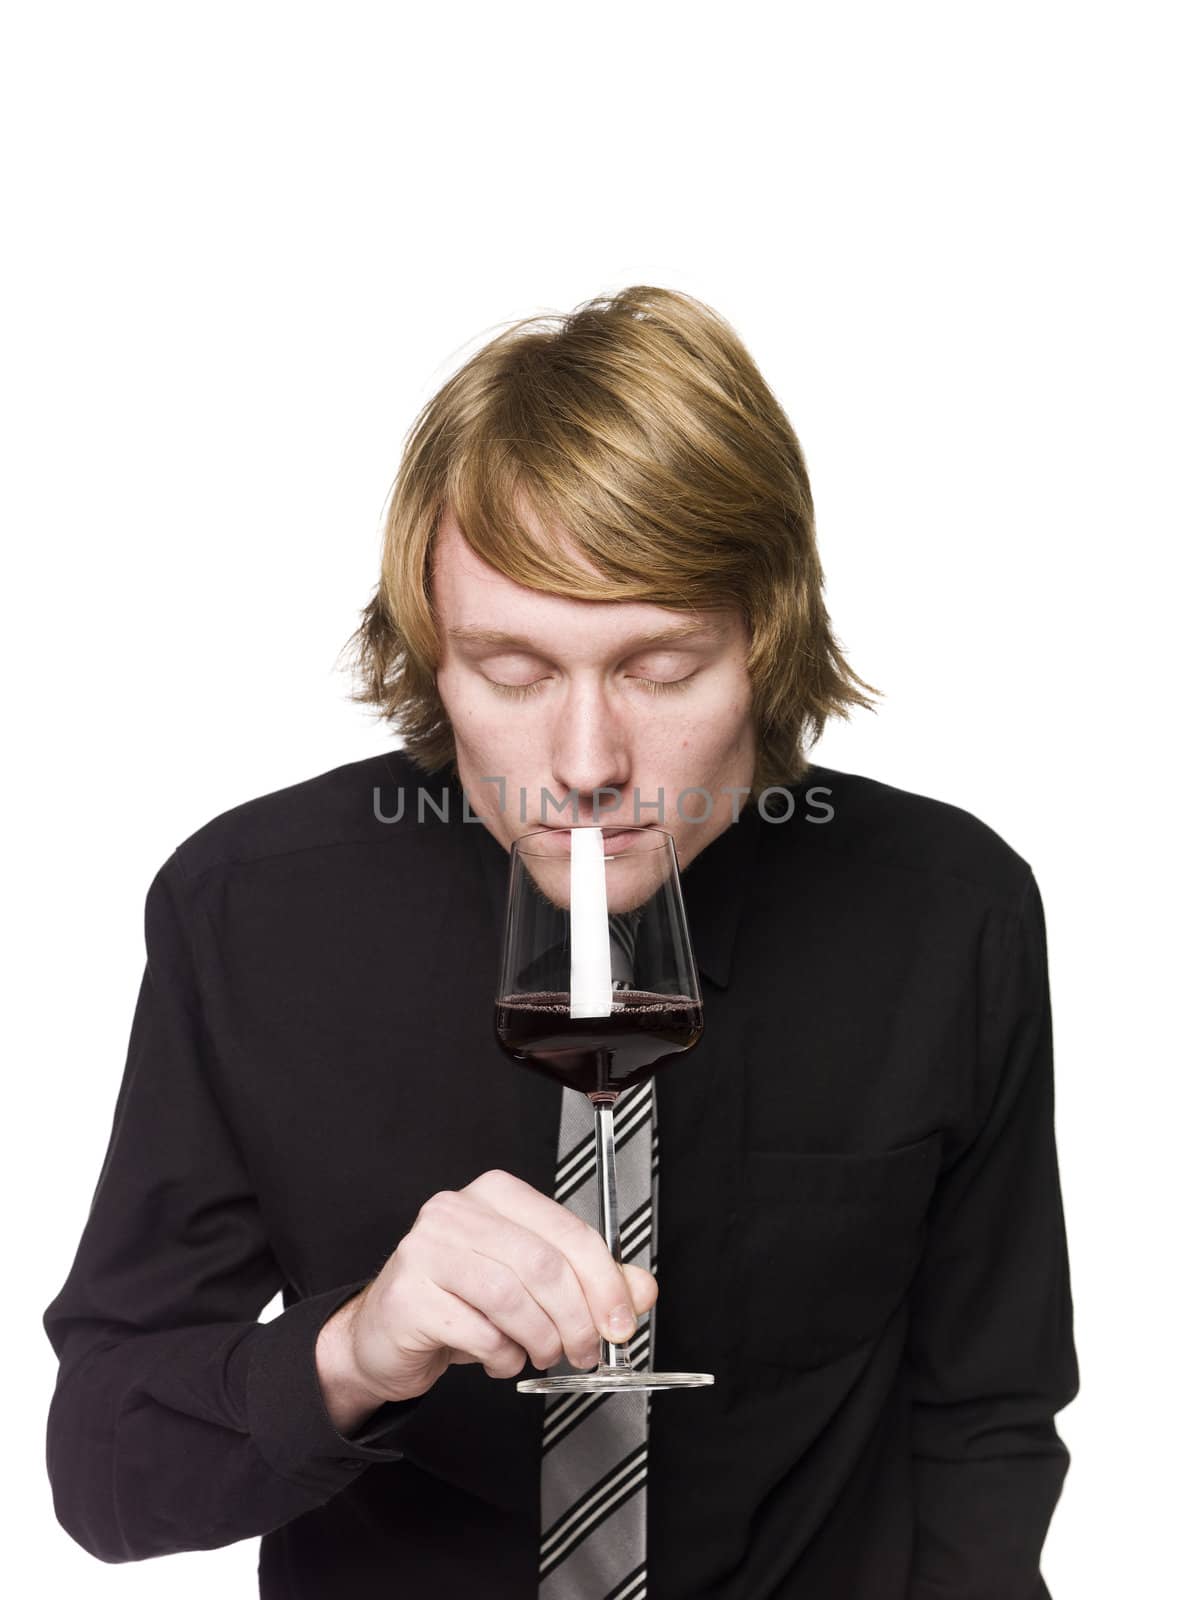 Man smelling wine by gemenacom